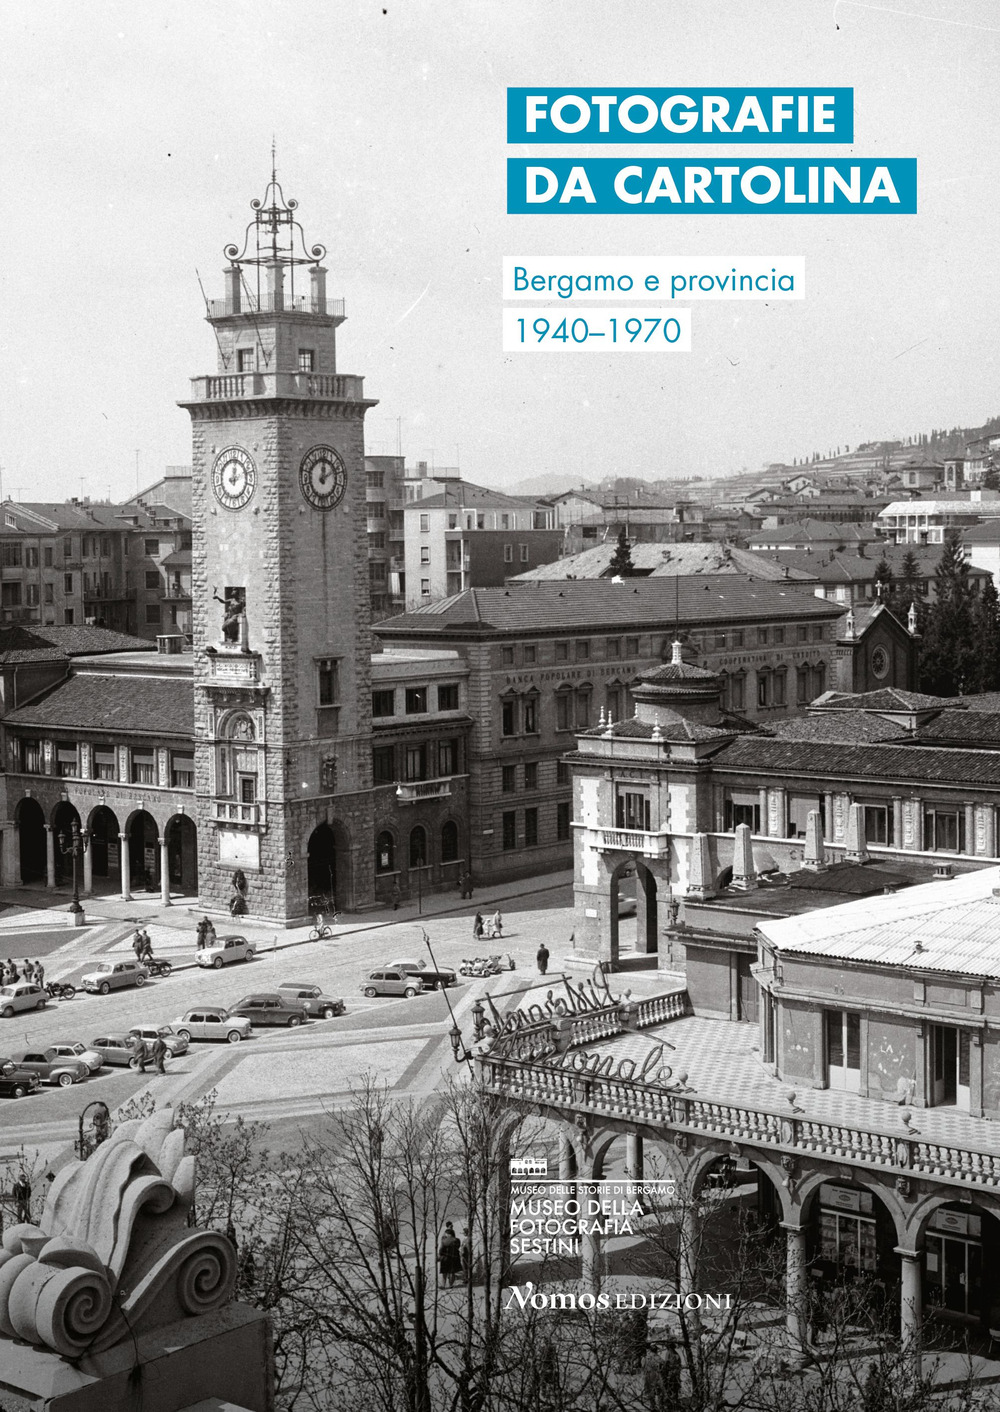 Fotografie da cartolina. Bergamo e provincia 1940-1970. Ediz. italiana e inglese